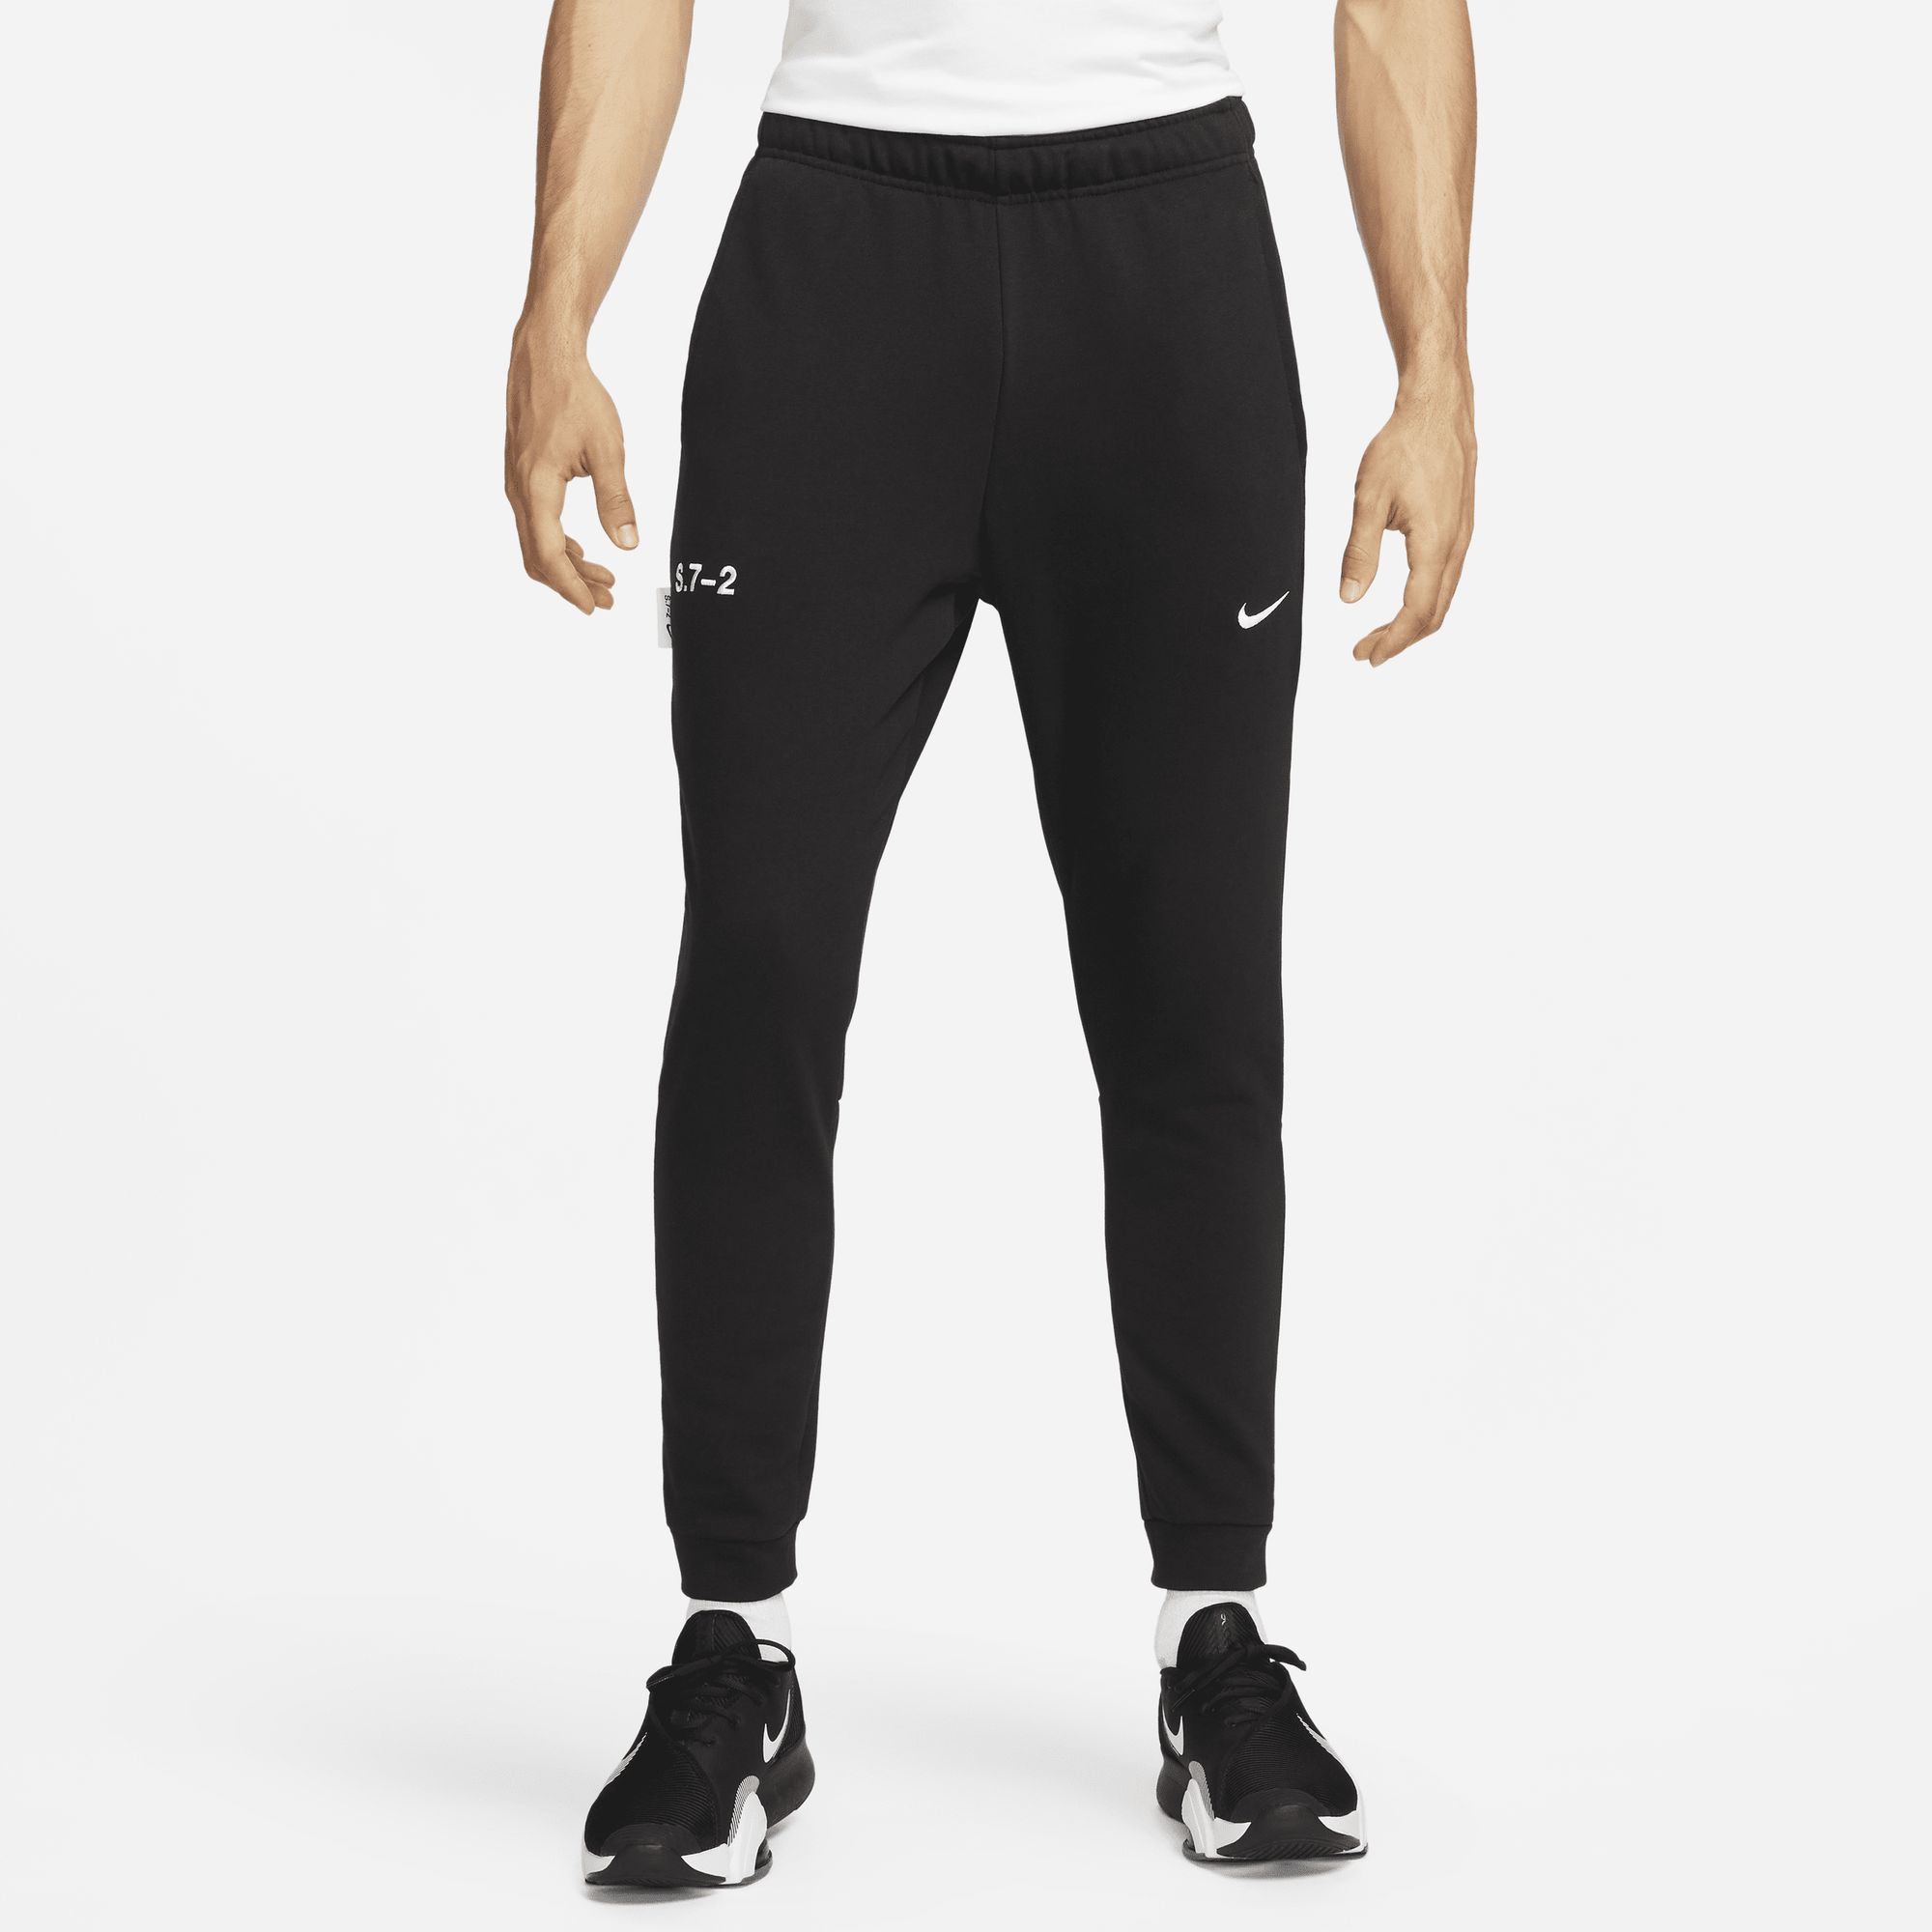 Shop Dri-FIT Studio '72 Men's Tapered Fitness Trousers | Nike UAE